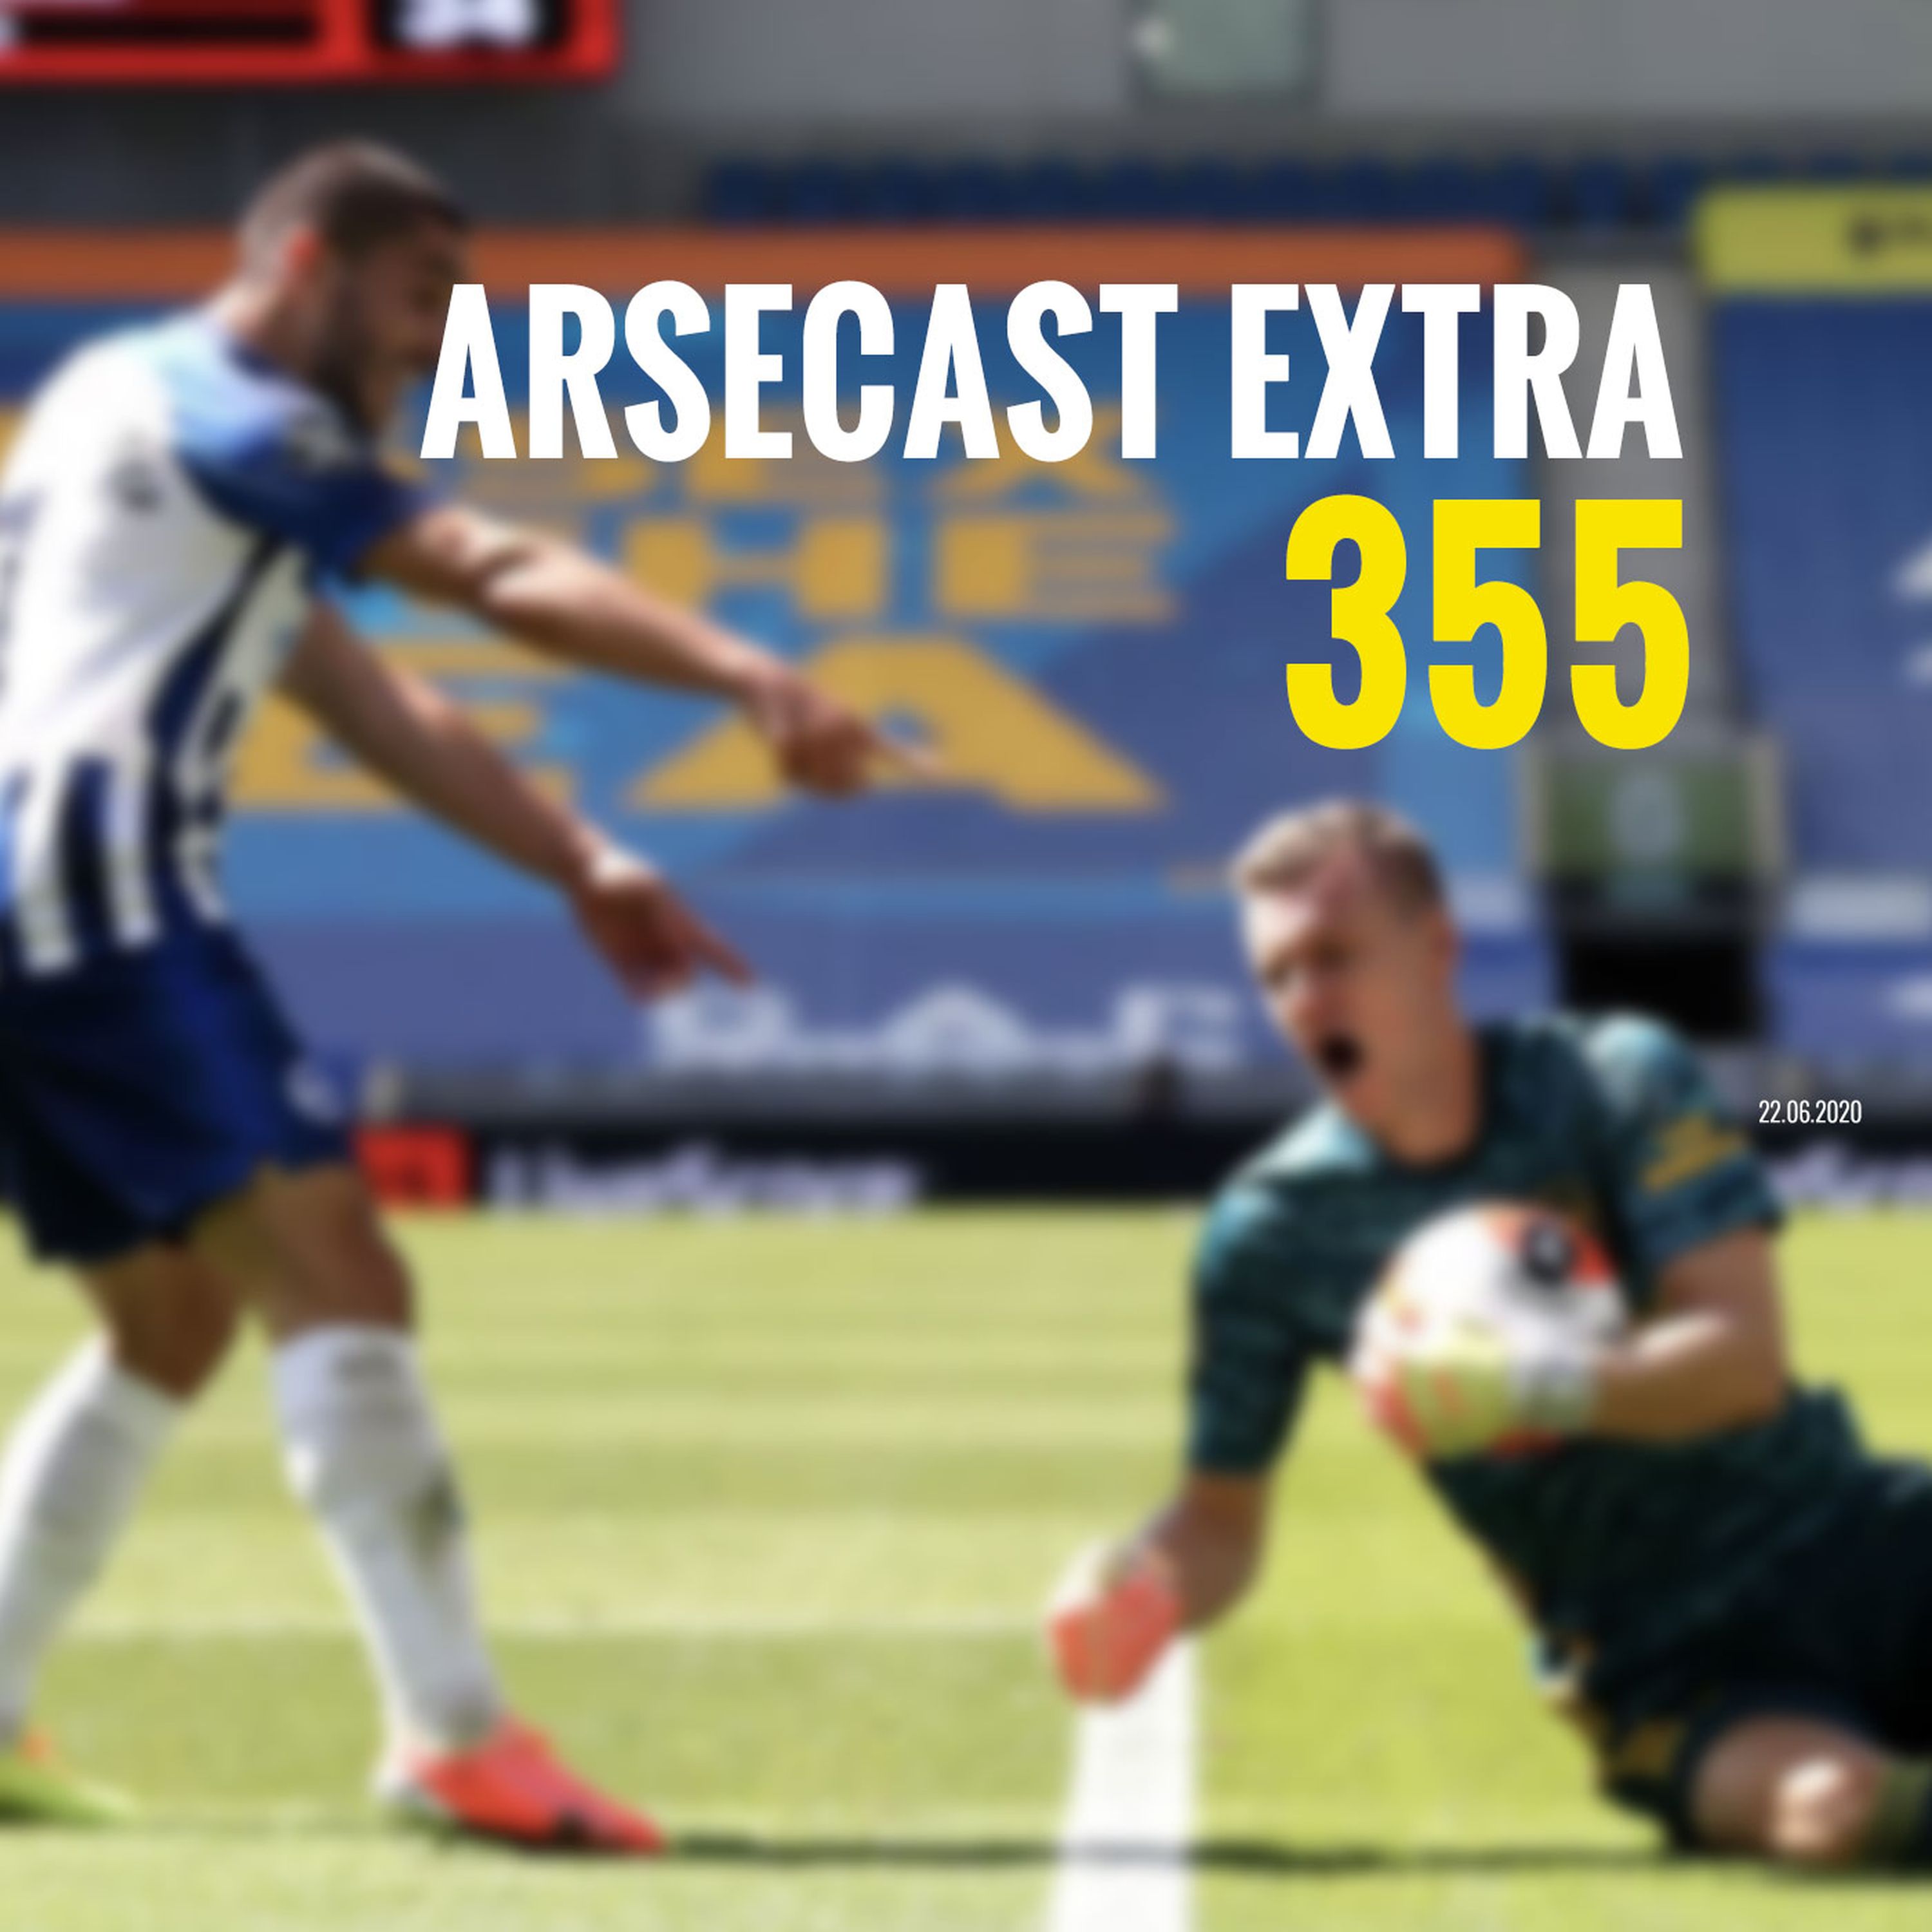 Arsecast Extra Episode 355 - 22.06.2020